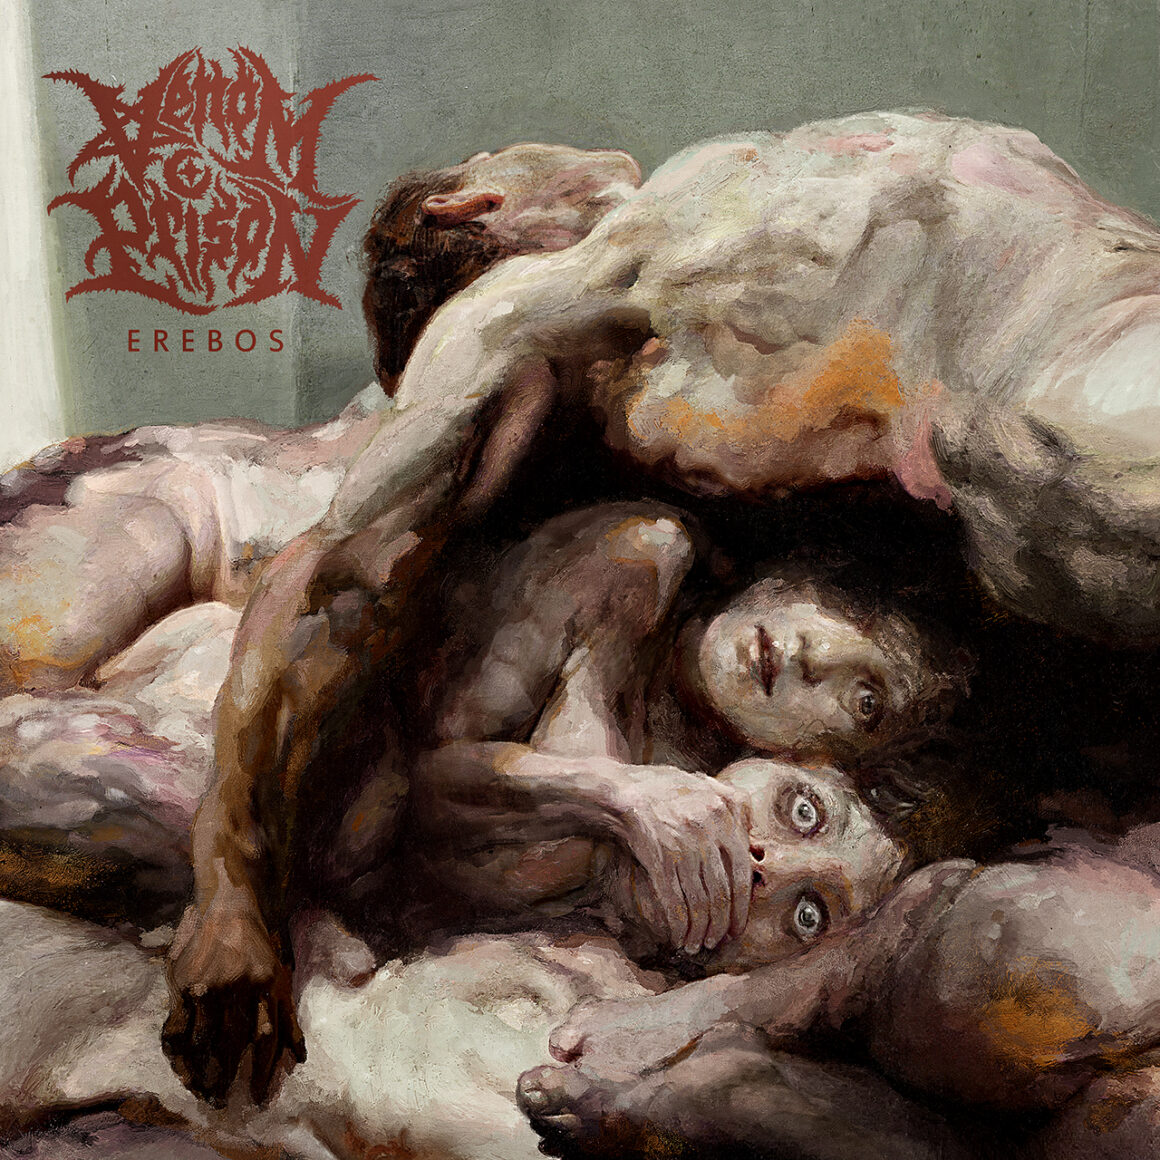 Venom Prison, cover album Erebos